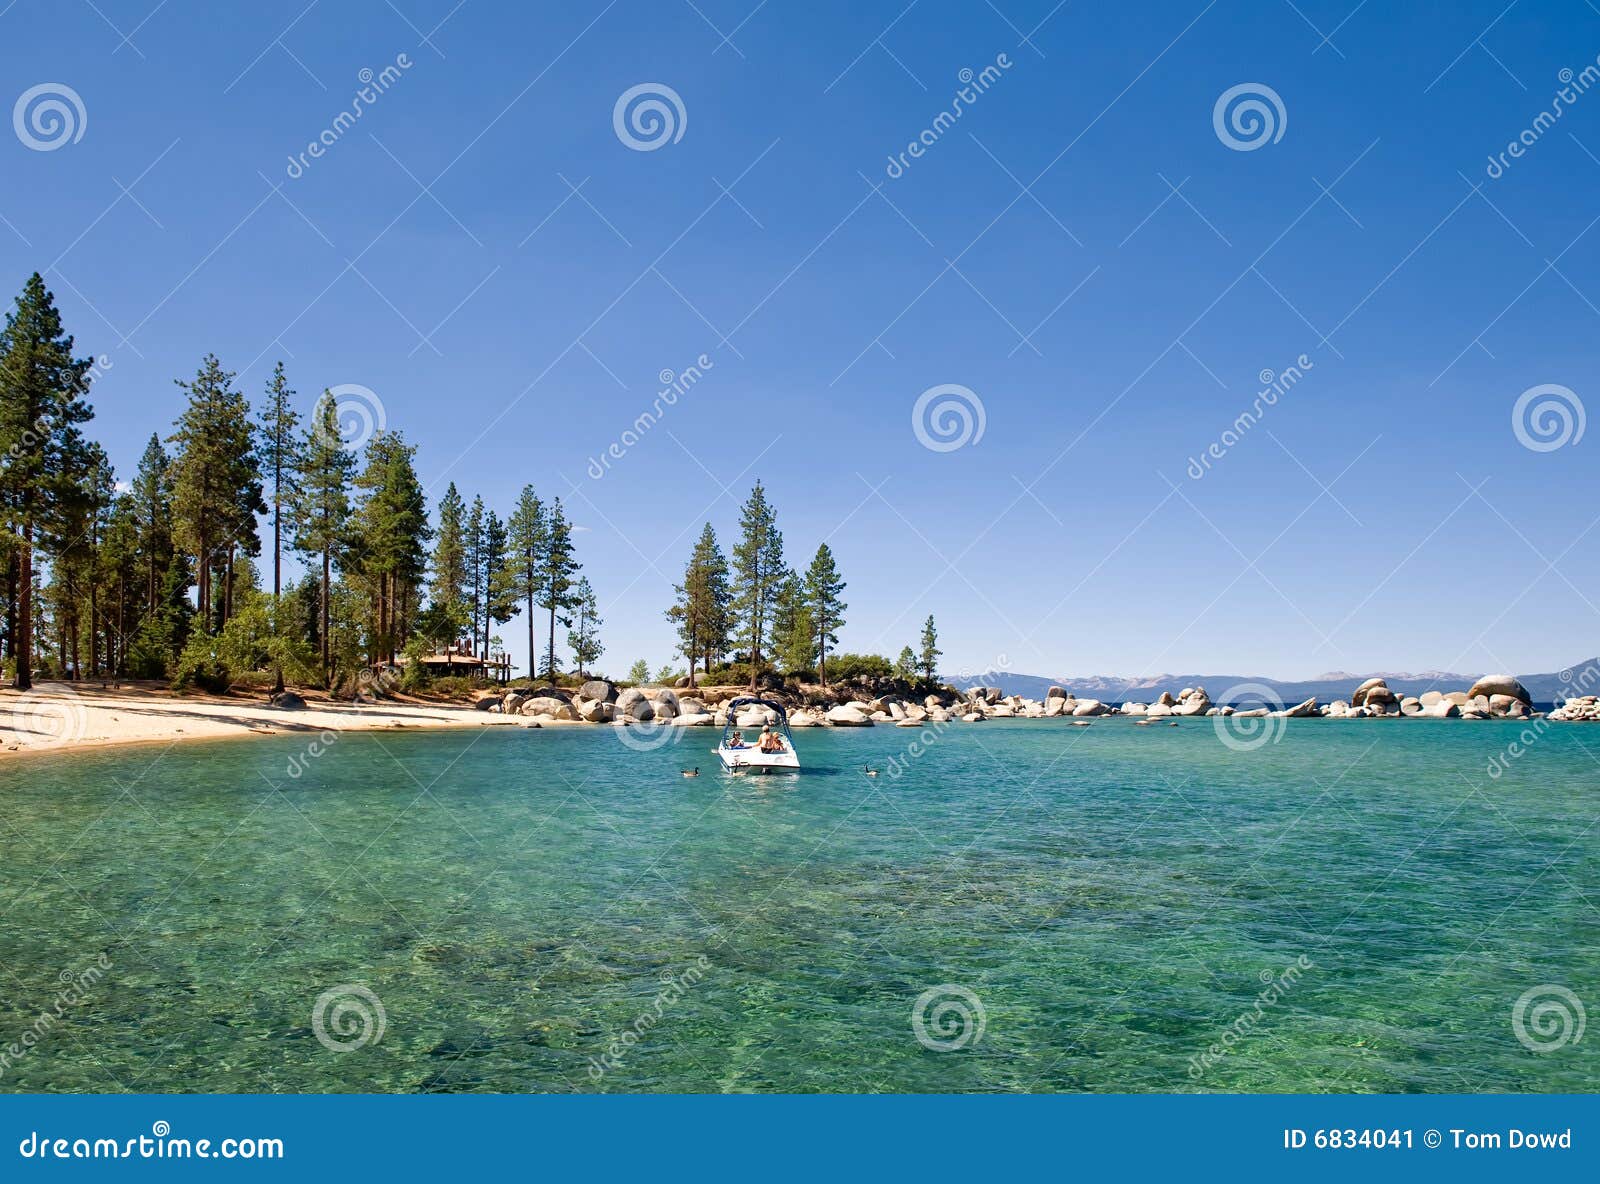 Scenic view of Lake Tahoe, California and Nevada, U.S.A.